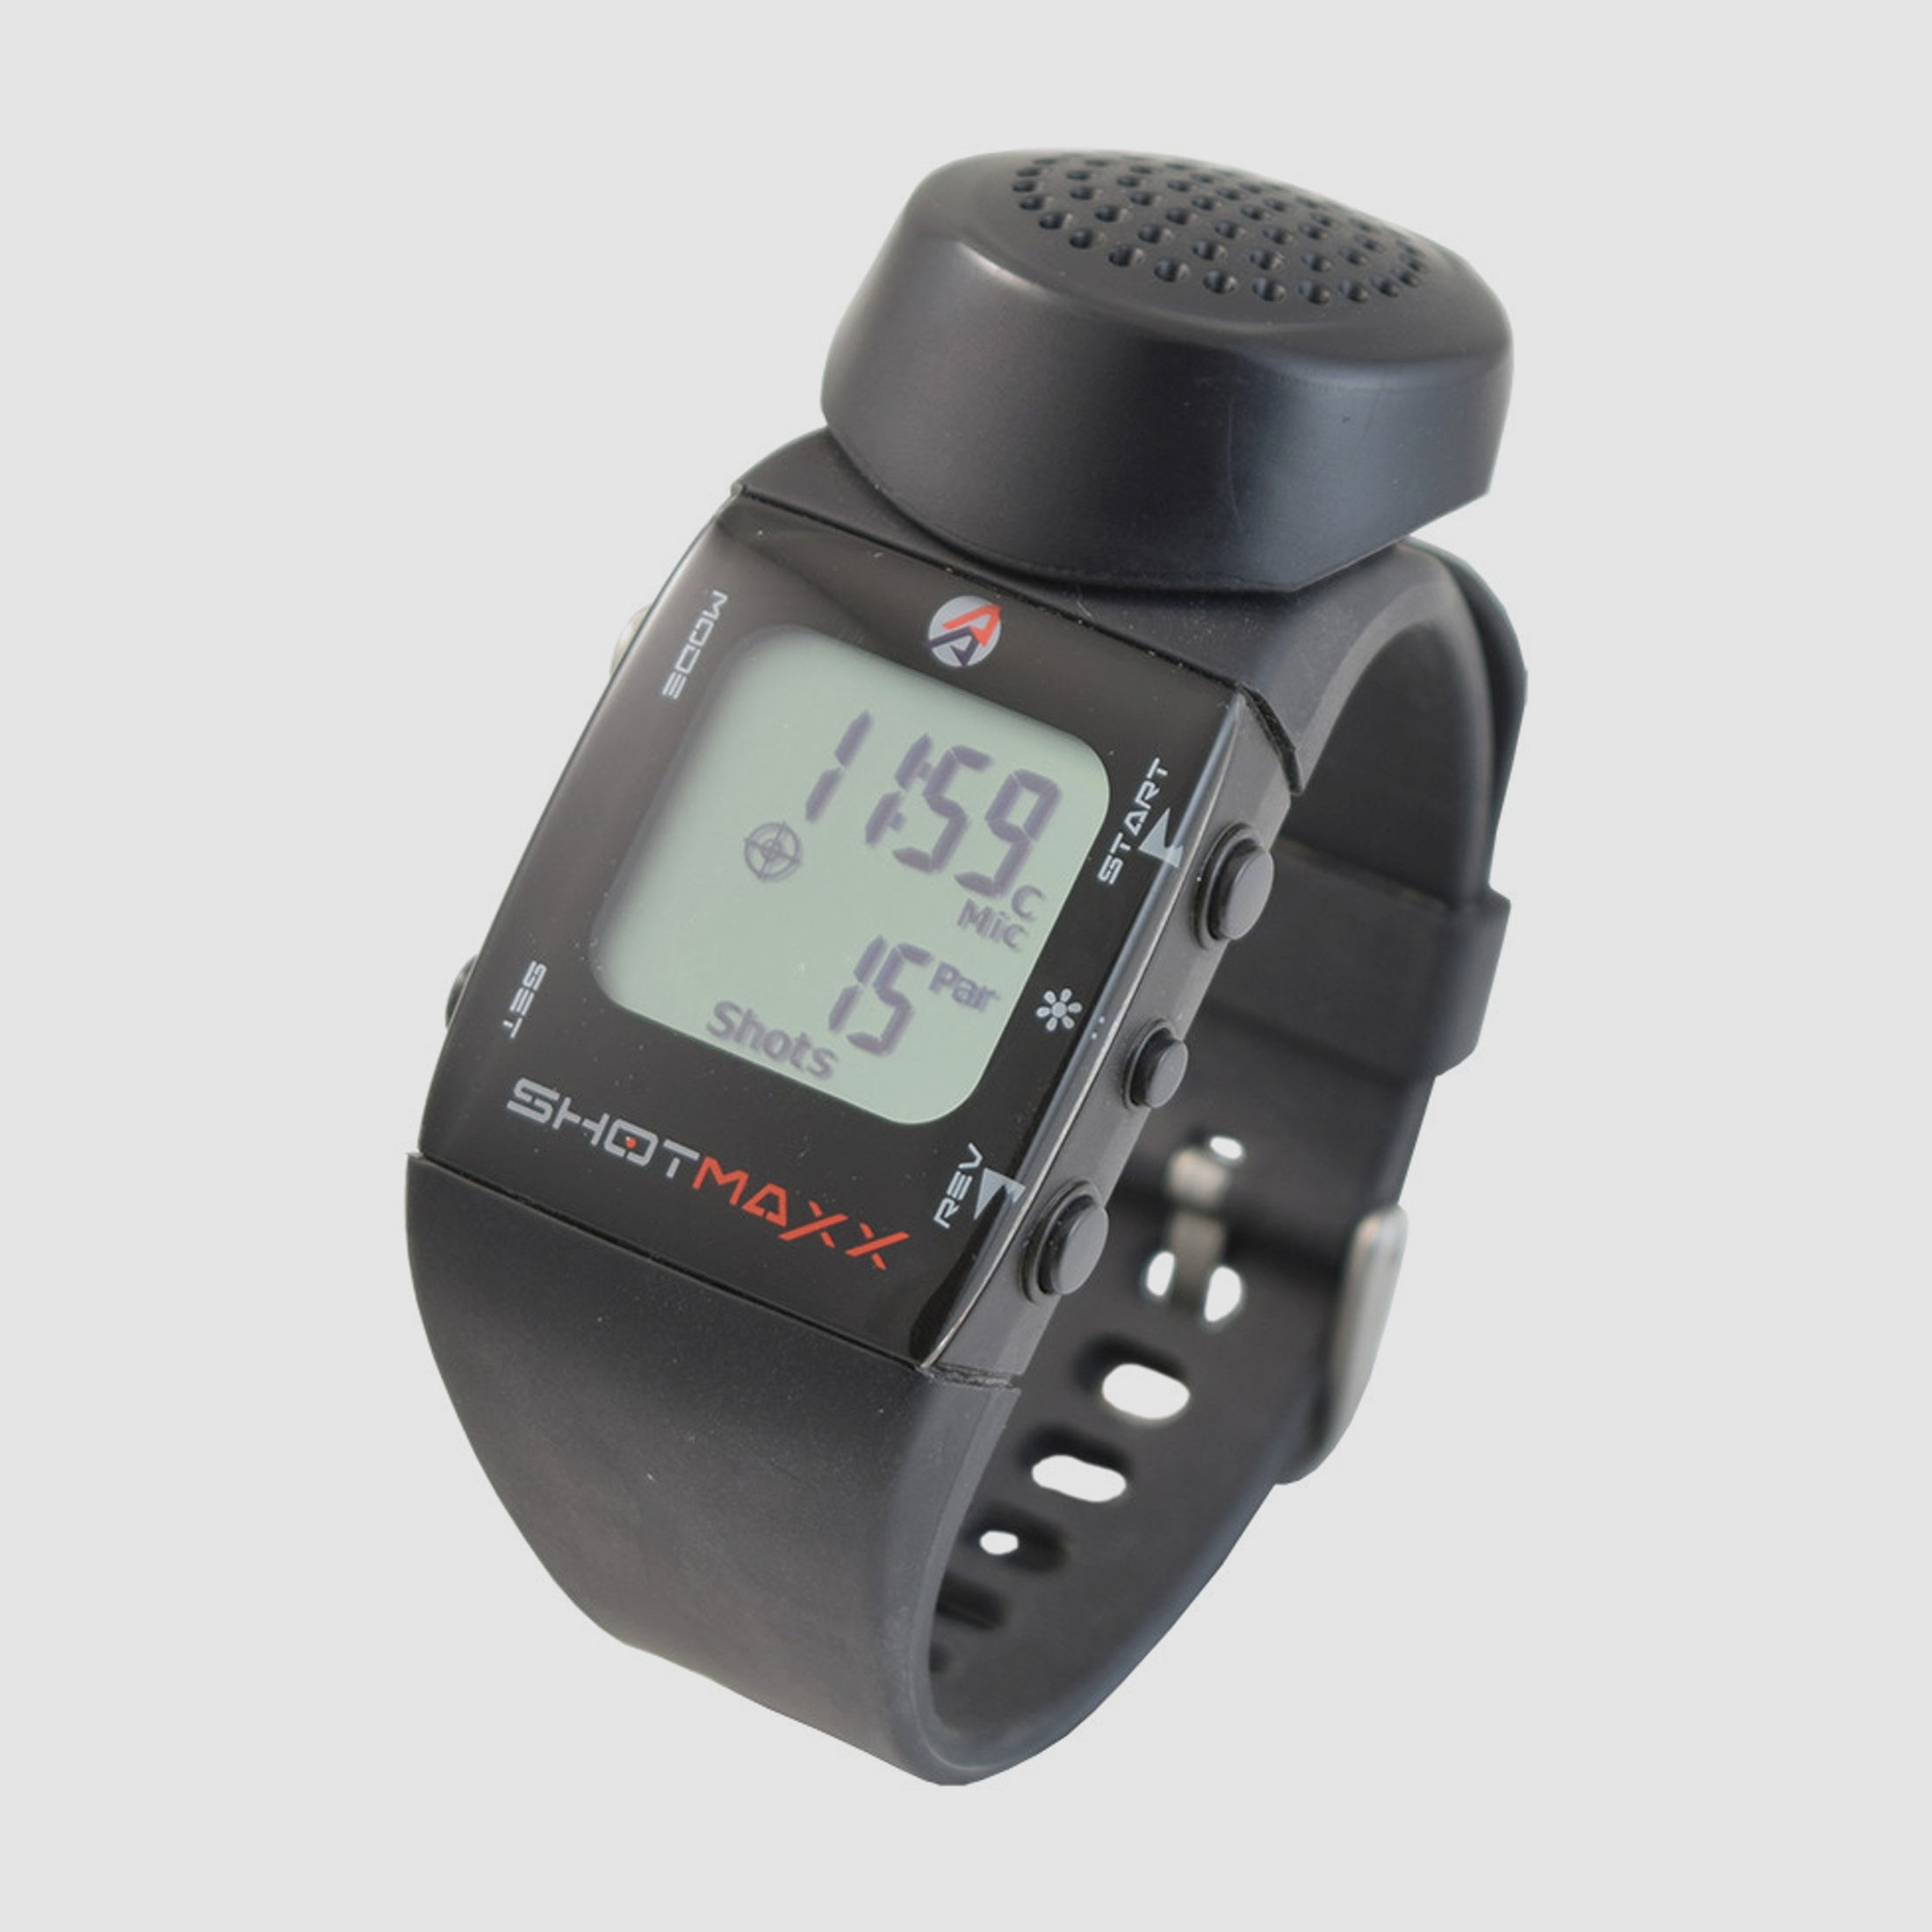 DAA -Double Alpha Shotmaxx-2 watch timer White Display